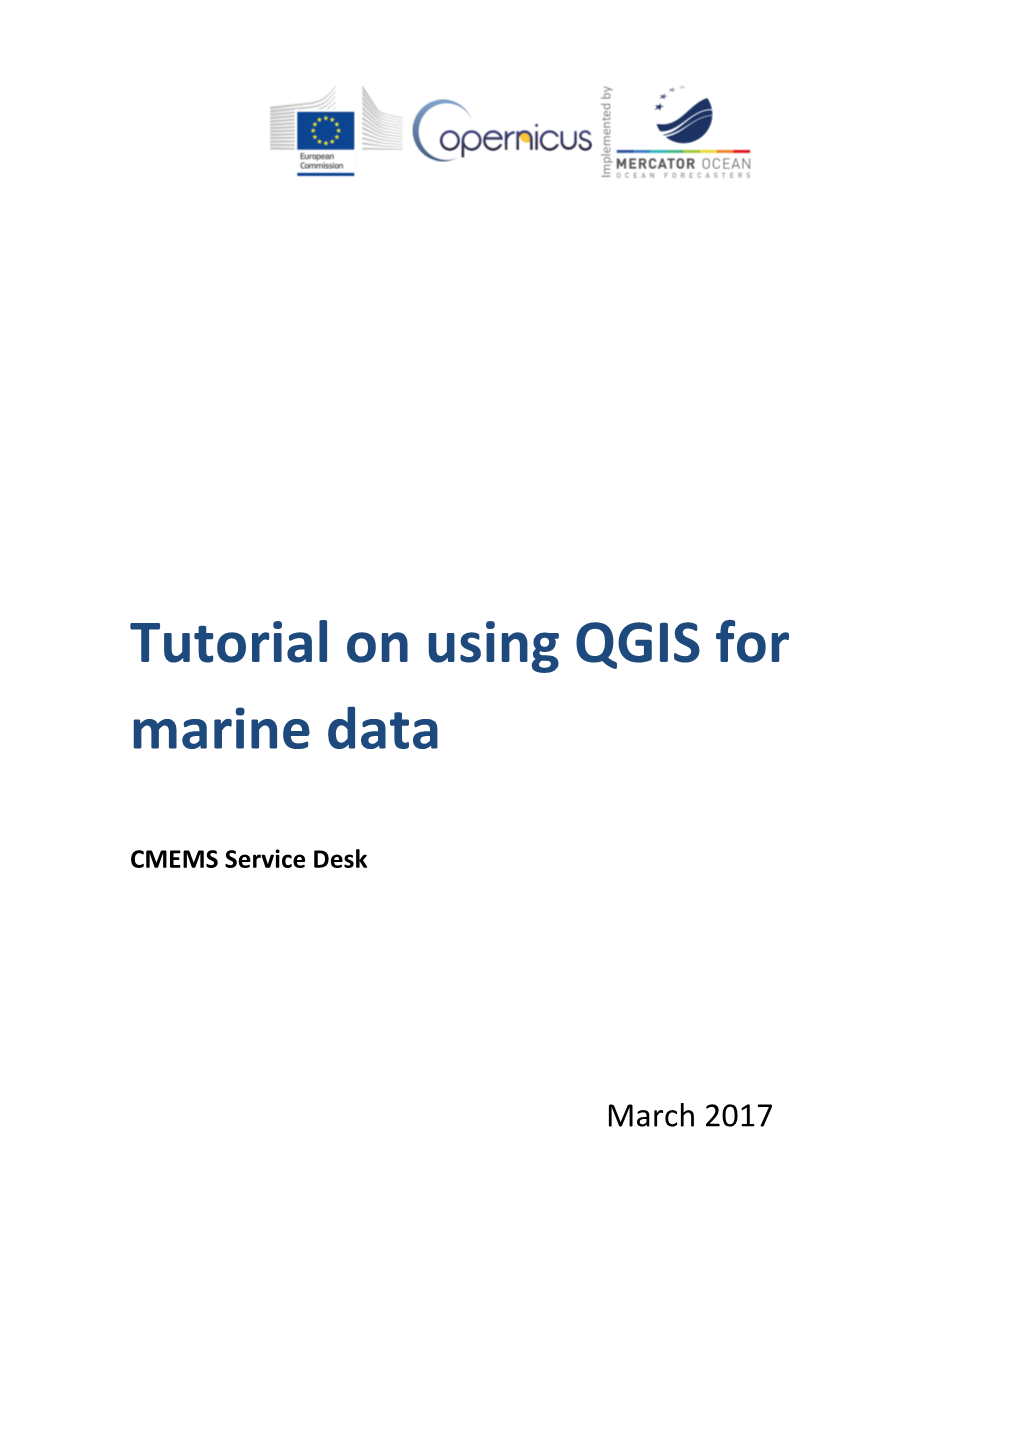 Tutorial on Using QGIS for Marine Data